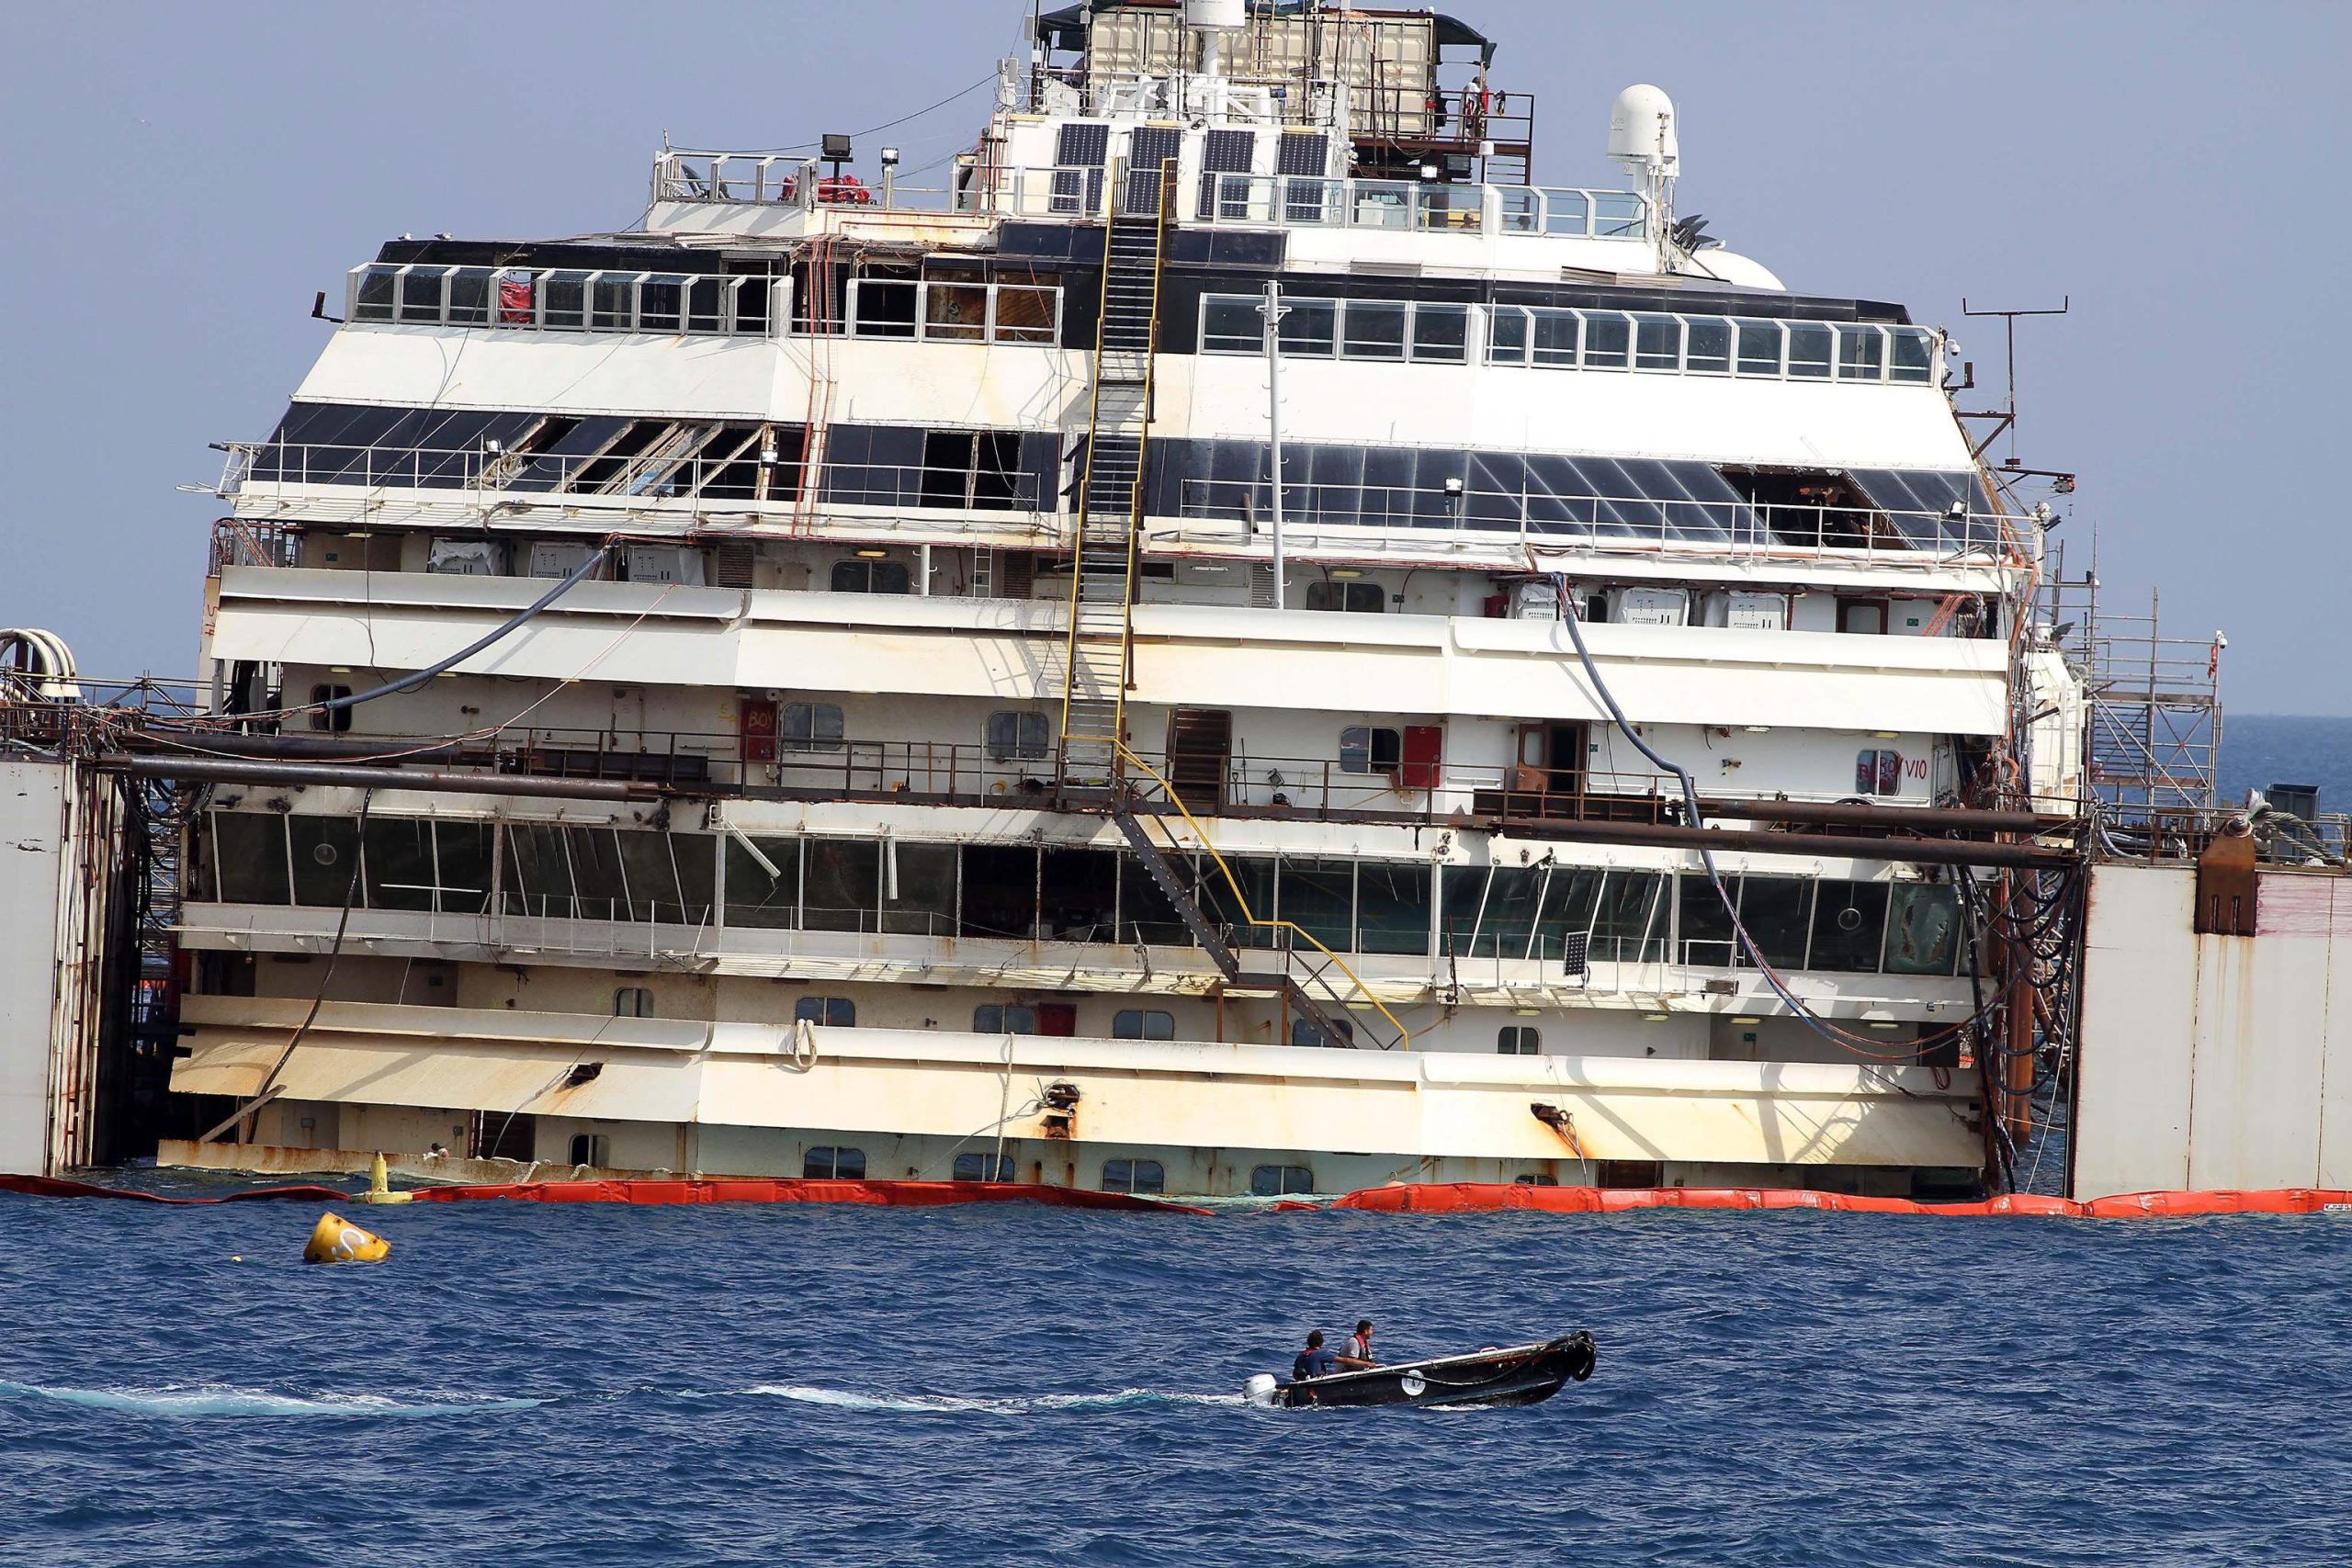 Encontrado corpo da última vítima do naufrágio do Costa Concordia